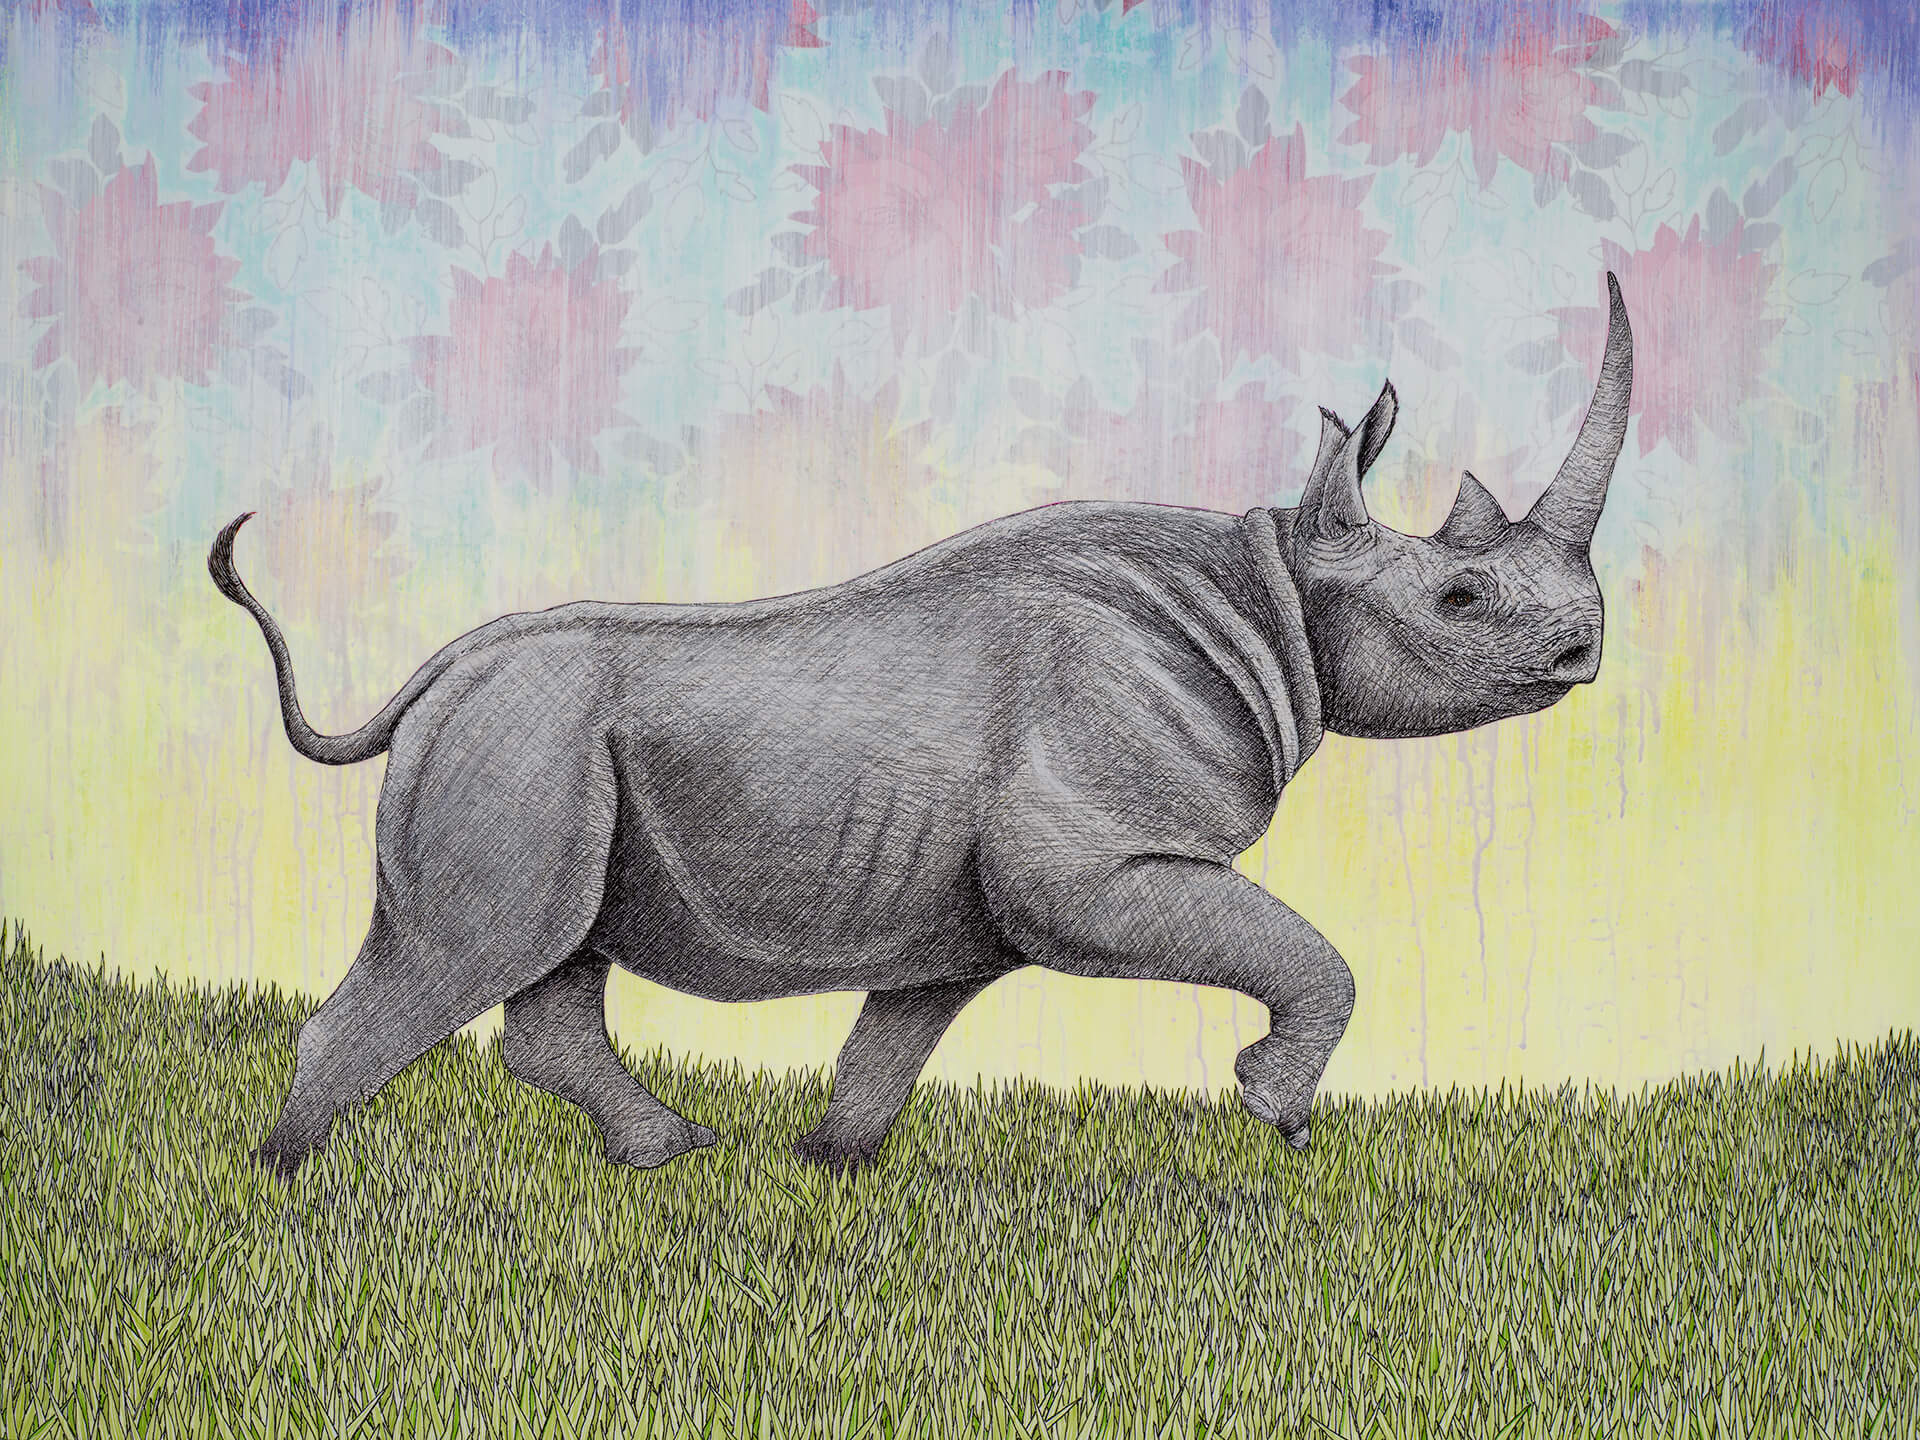 ‘Rhino’, 40” x 30”, SOLD $600